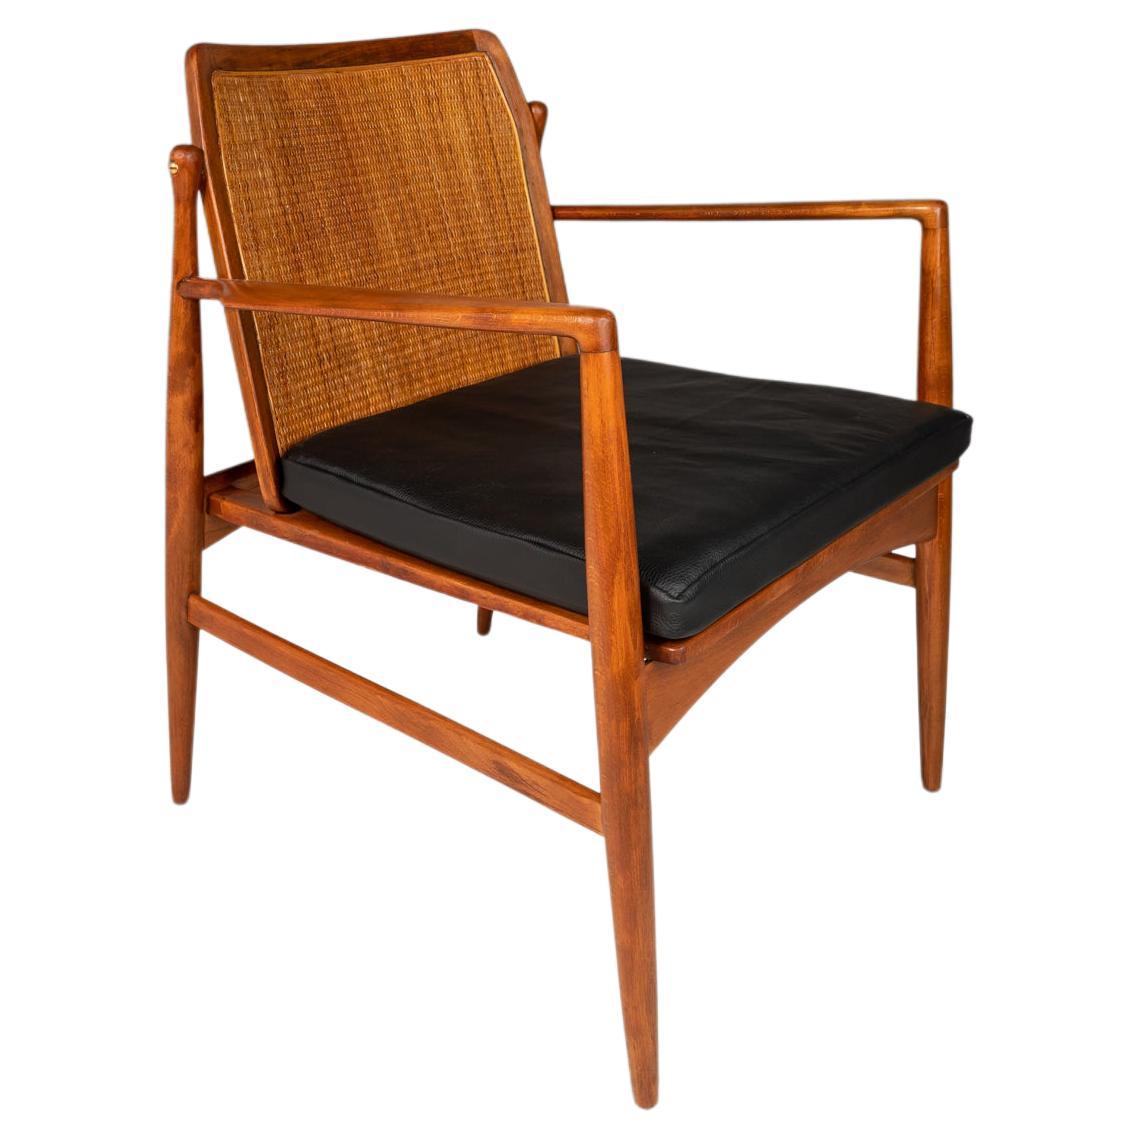 Danish Modern Lounge Chair w/ Cane Back by Ib Kofod Larsen for Selig, c. 1960's